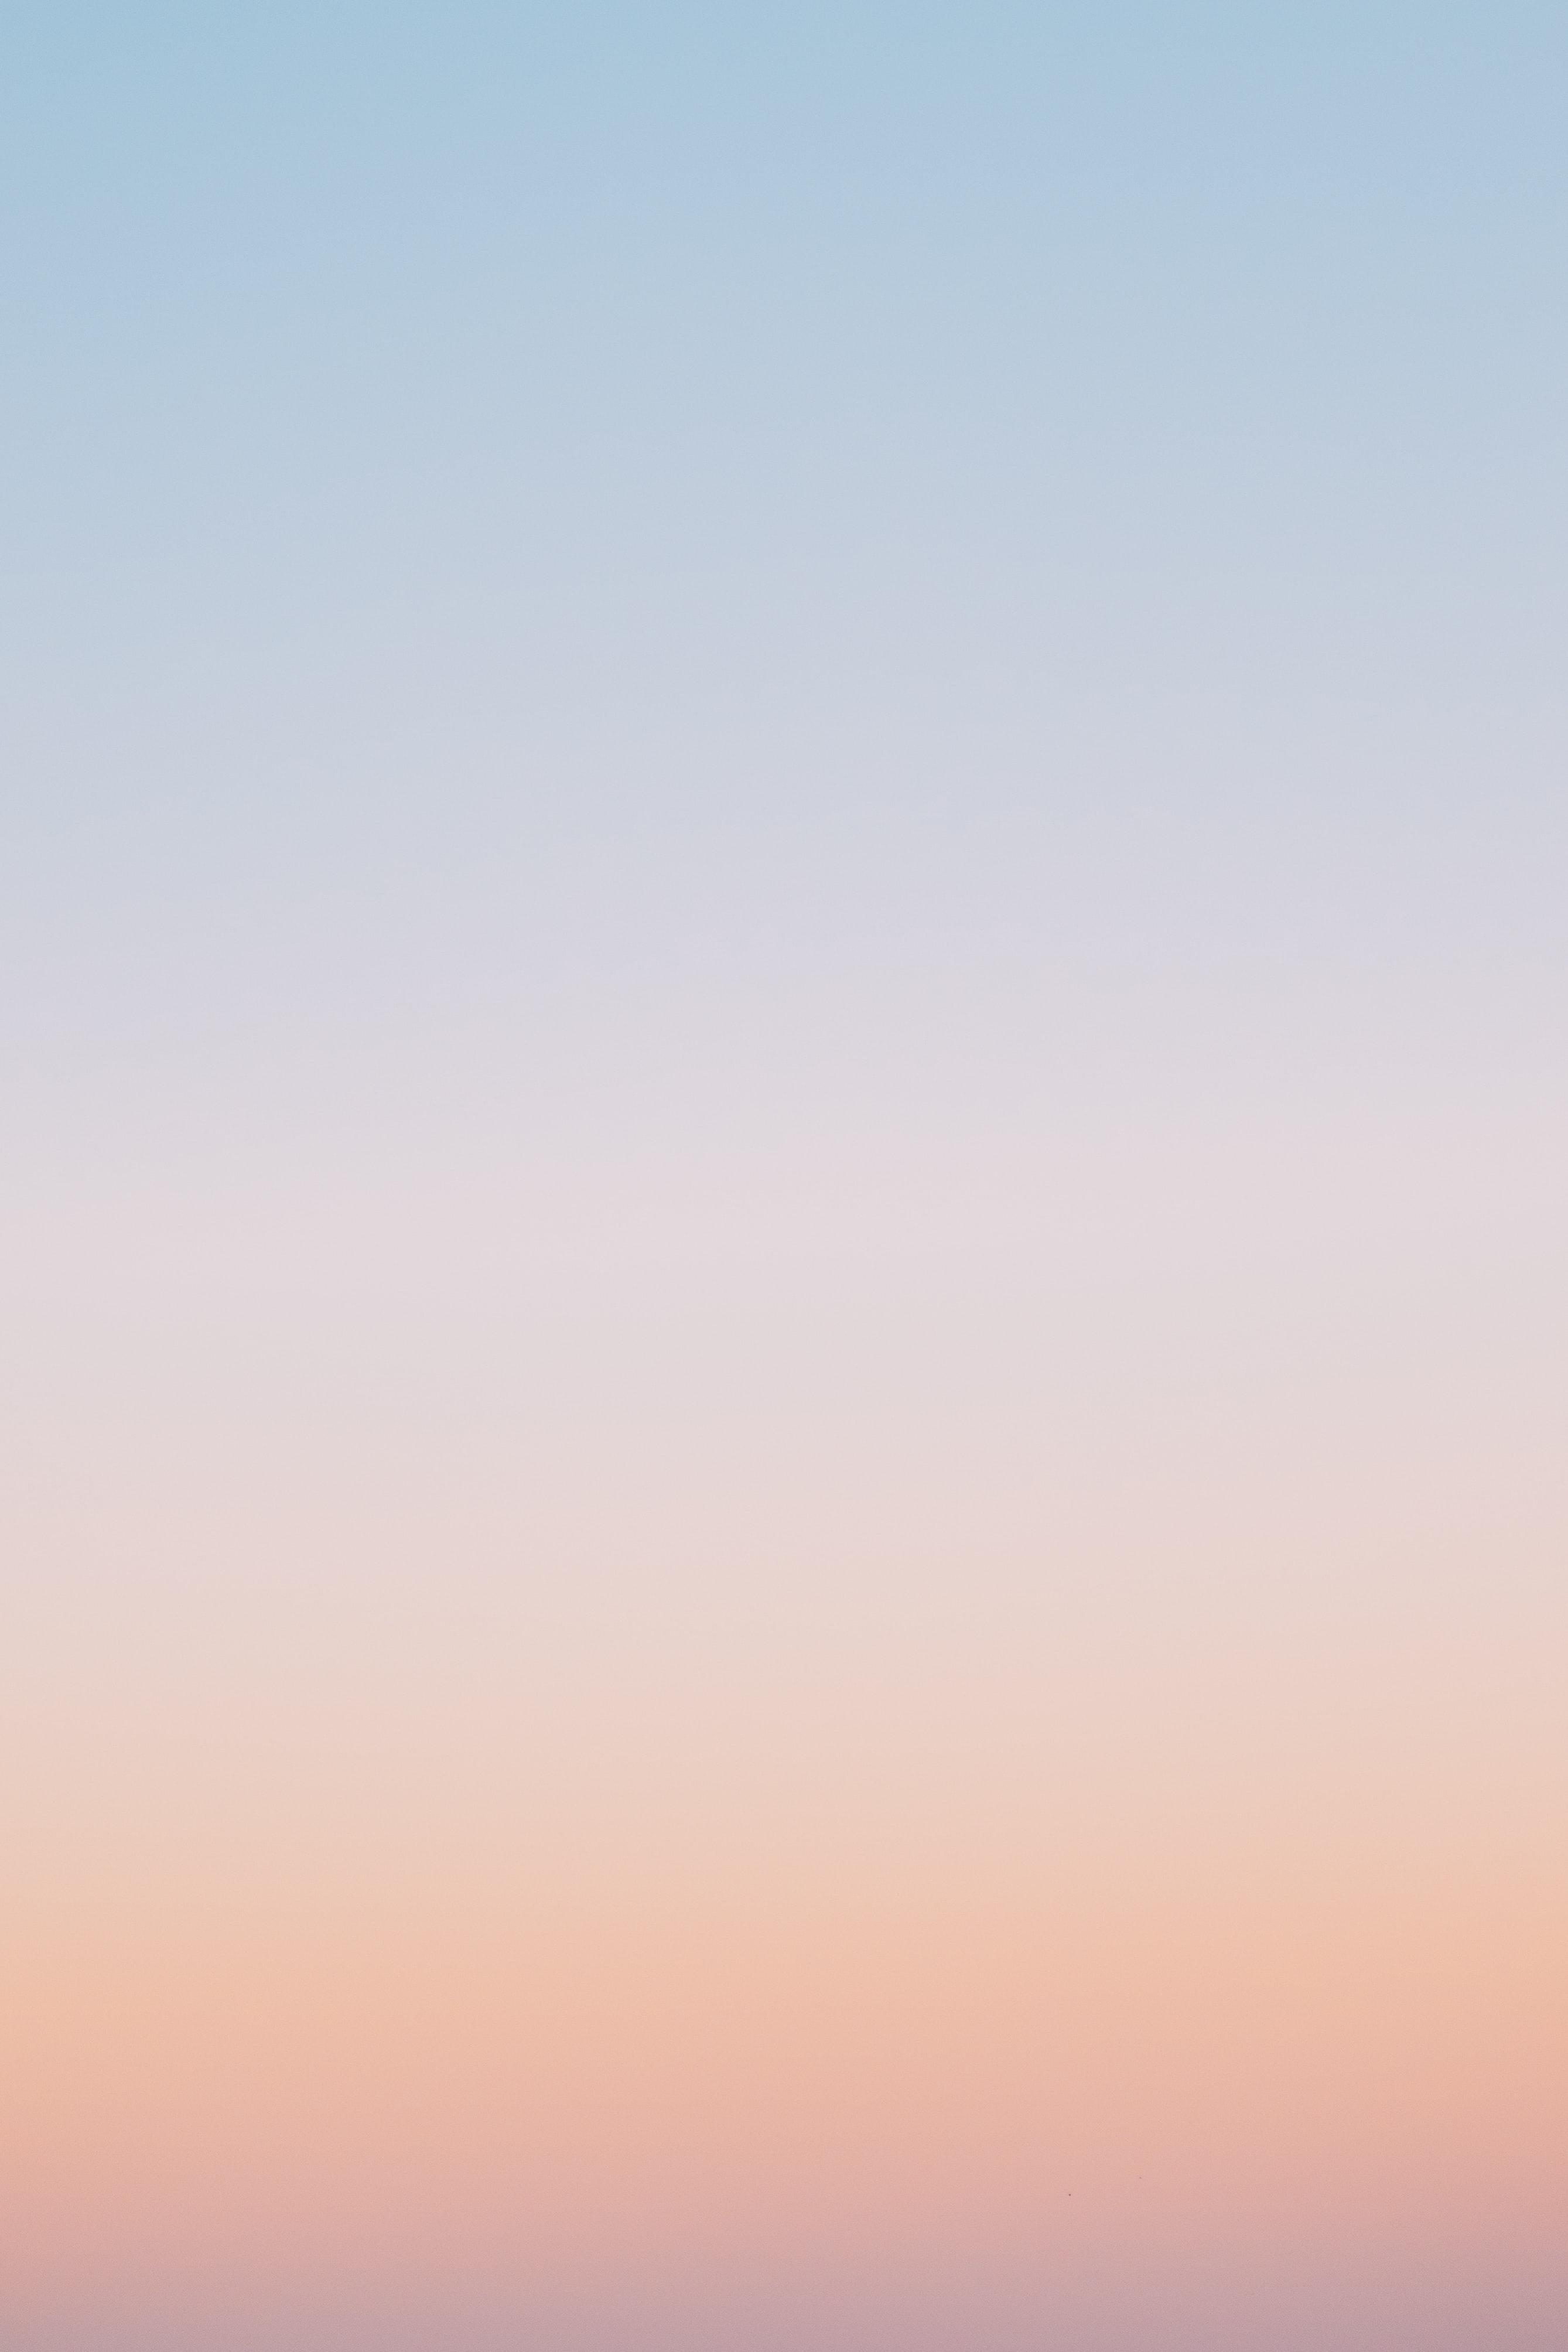 Desktop FHD gradient, abstract, background, sky, pink, blue